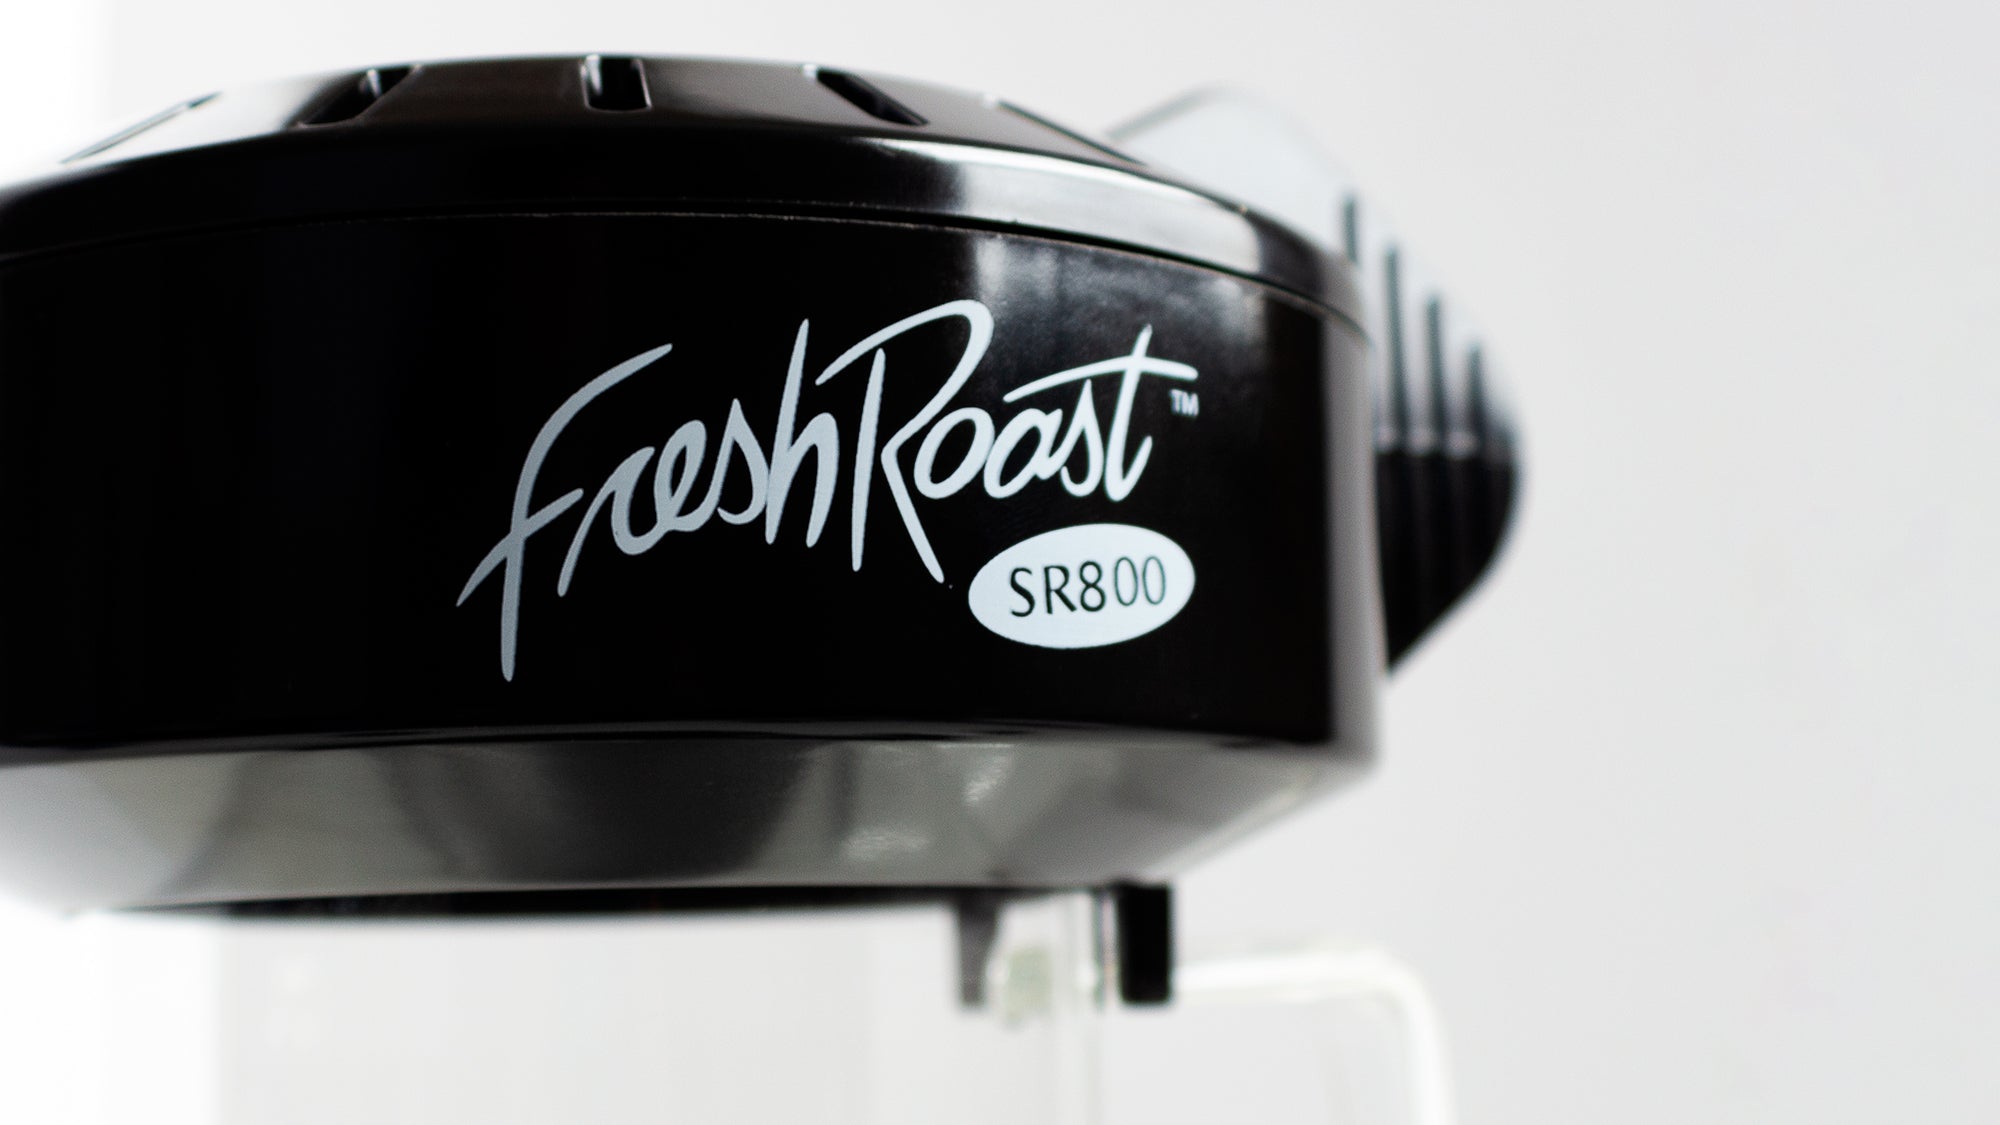 The chaff cap of a Fresh Roast SR800 home coffee roaster.